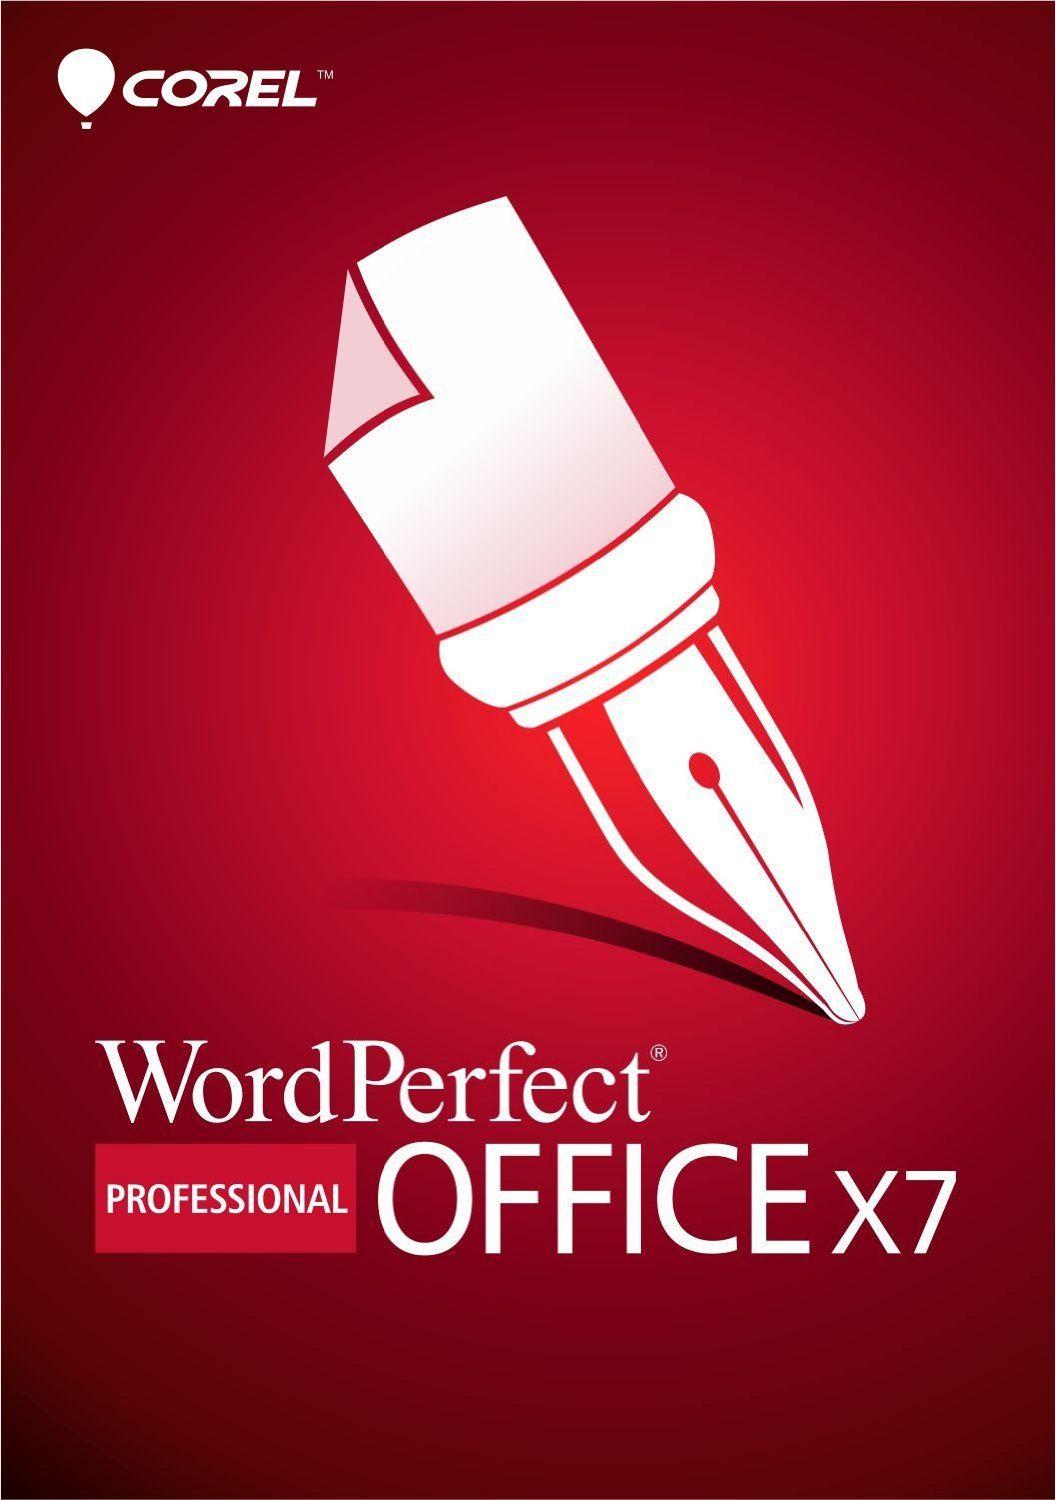 WordPerfect Logo - Corel - WordPerfect Office X7 Pro Upgrade #C200-2592